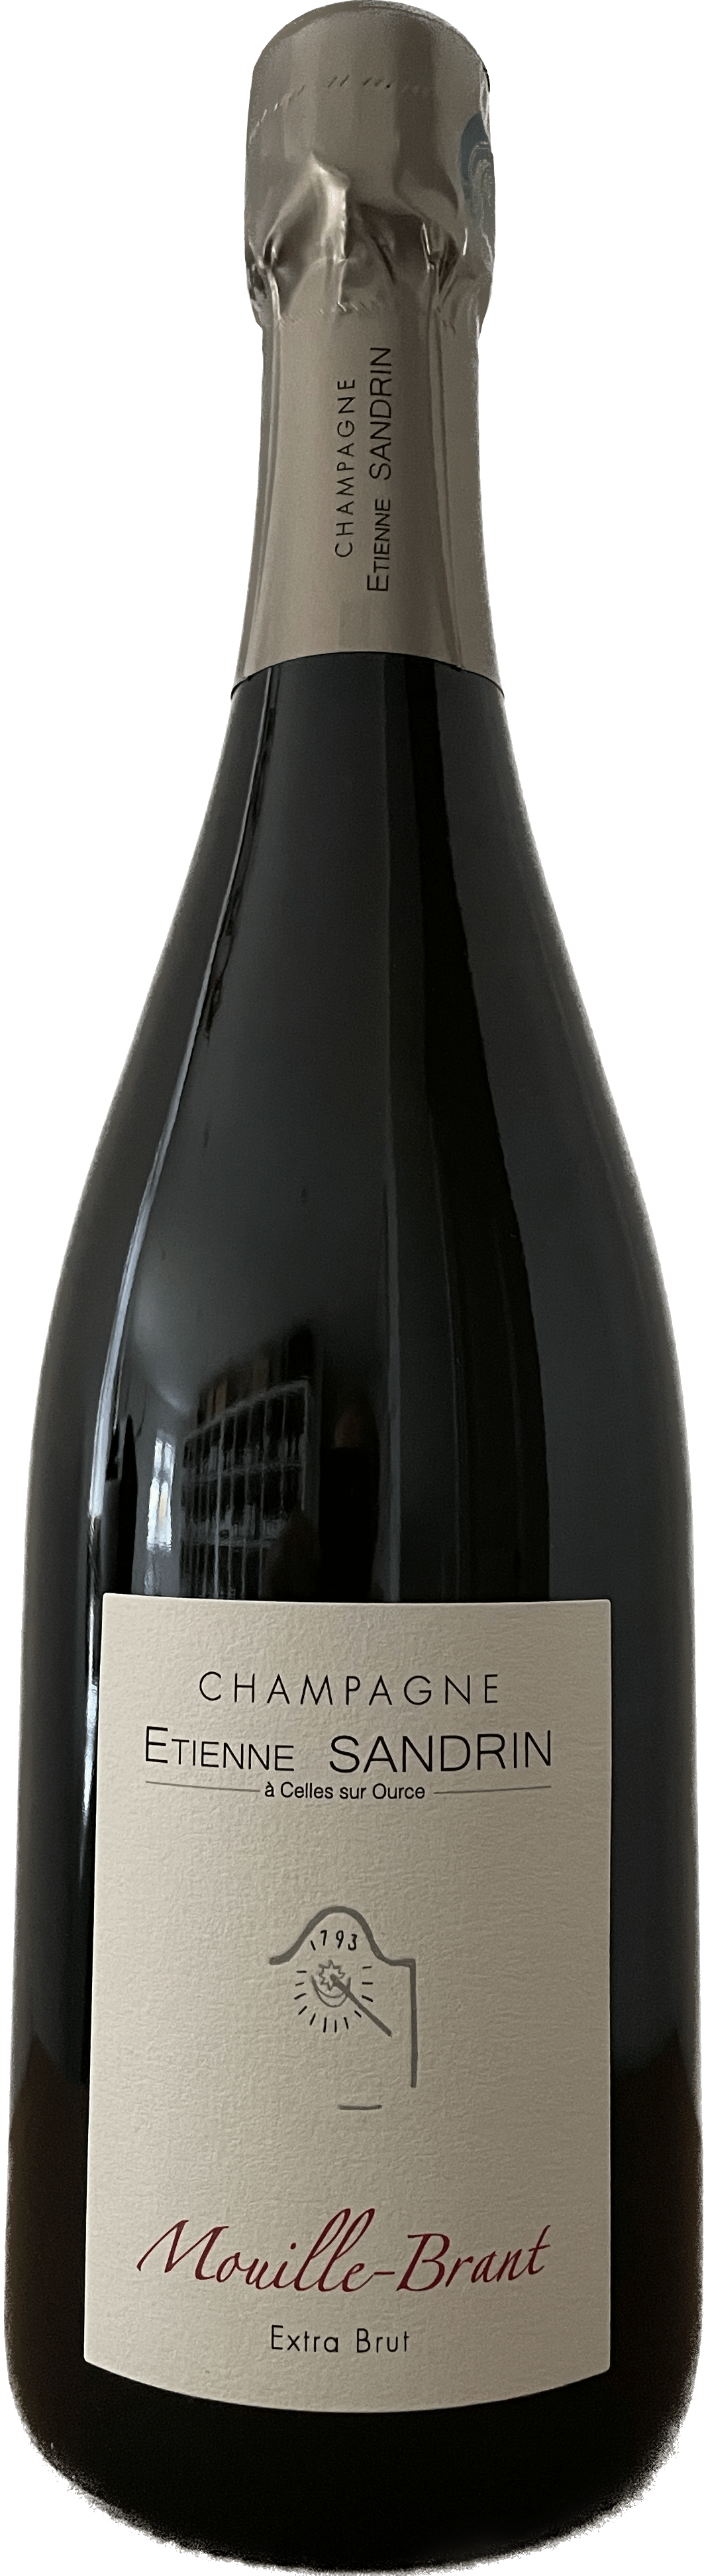 Champagne Etienne Sandrin Mouille-Brant 2019